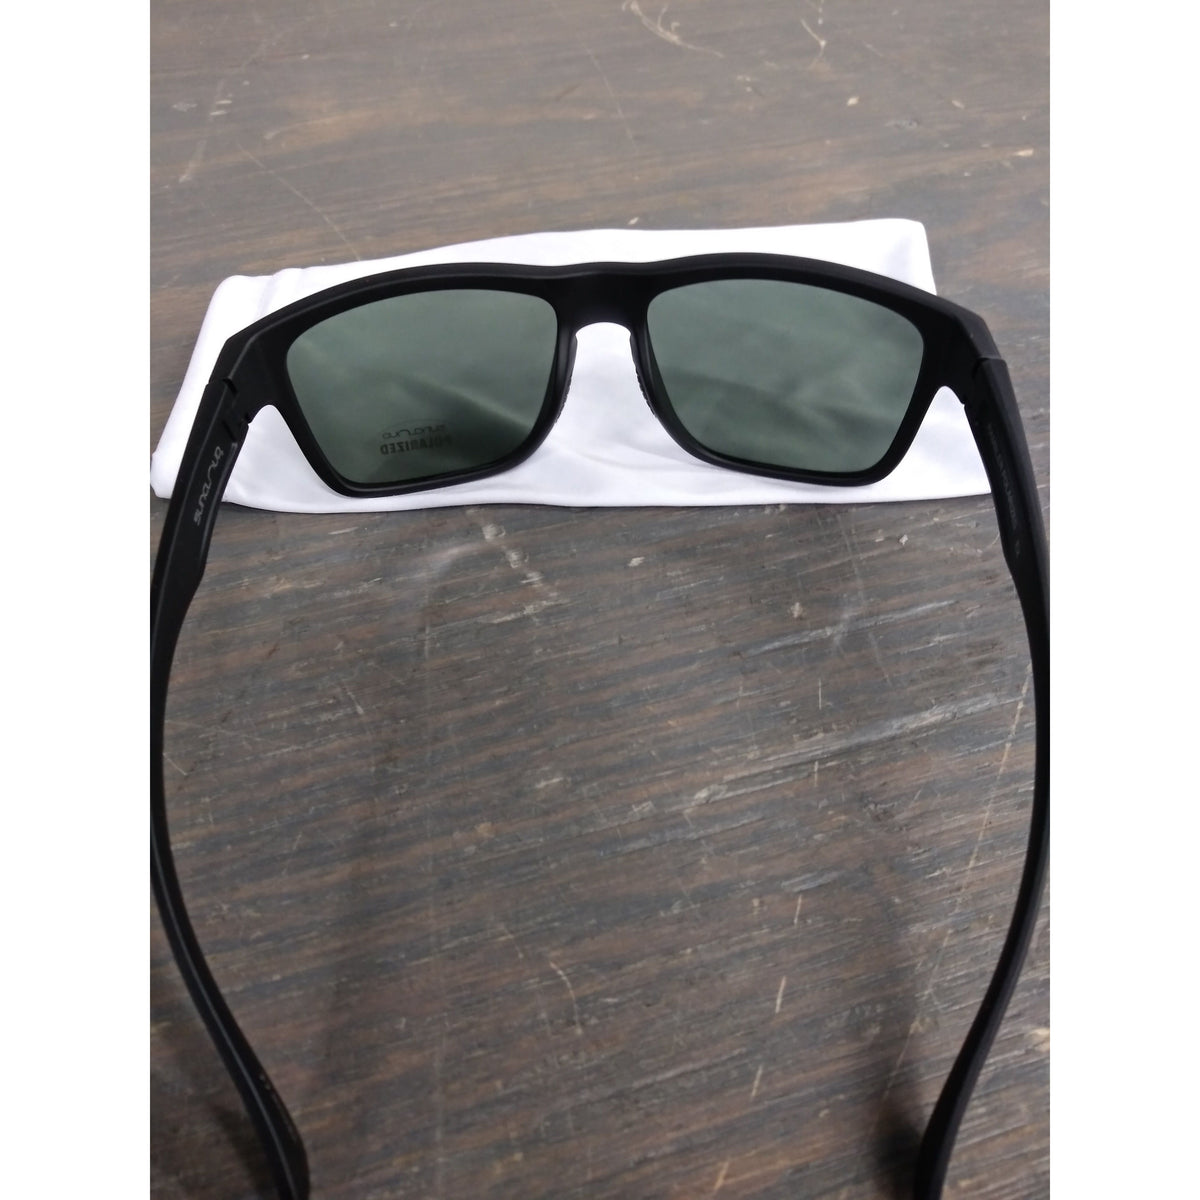 Suncloud Rambler Sunglasses - Matte Black; Polarized Gray Green - Used - Acceptable